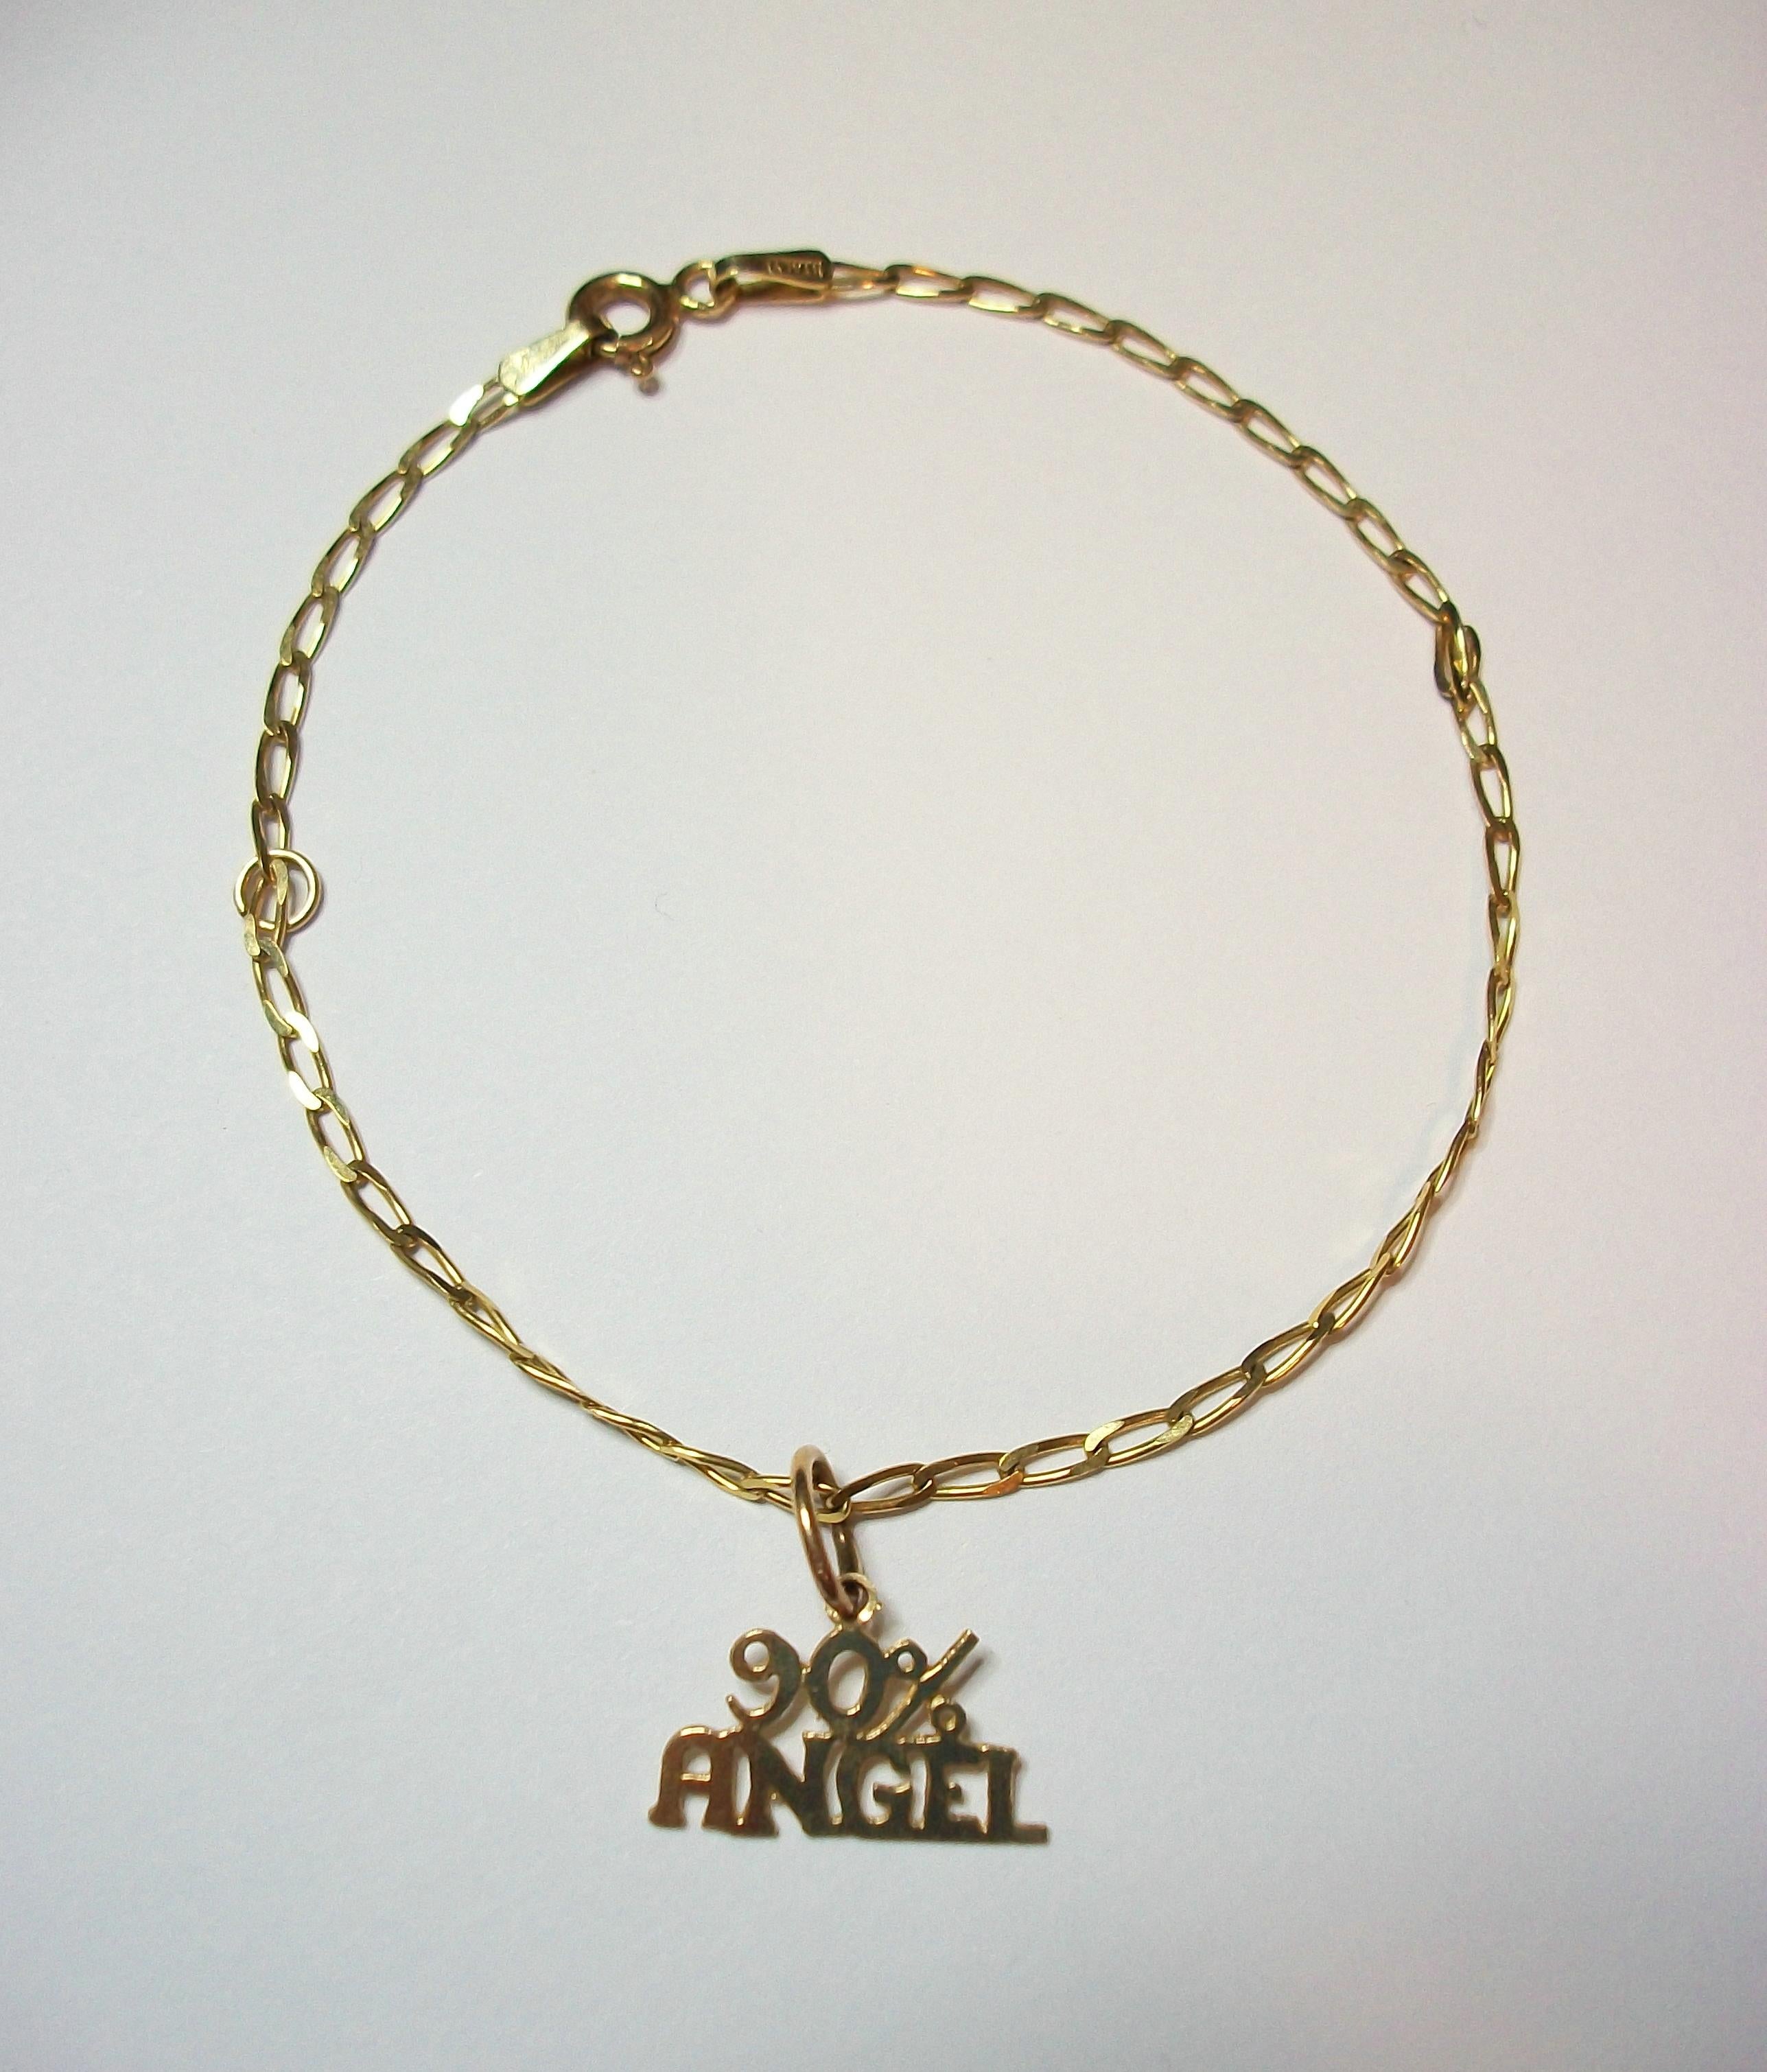 Modern Vintage 10K Gold Chain Link Bracelet - 90% Angel Charm - Signed - Italy - 20th C For Sale